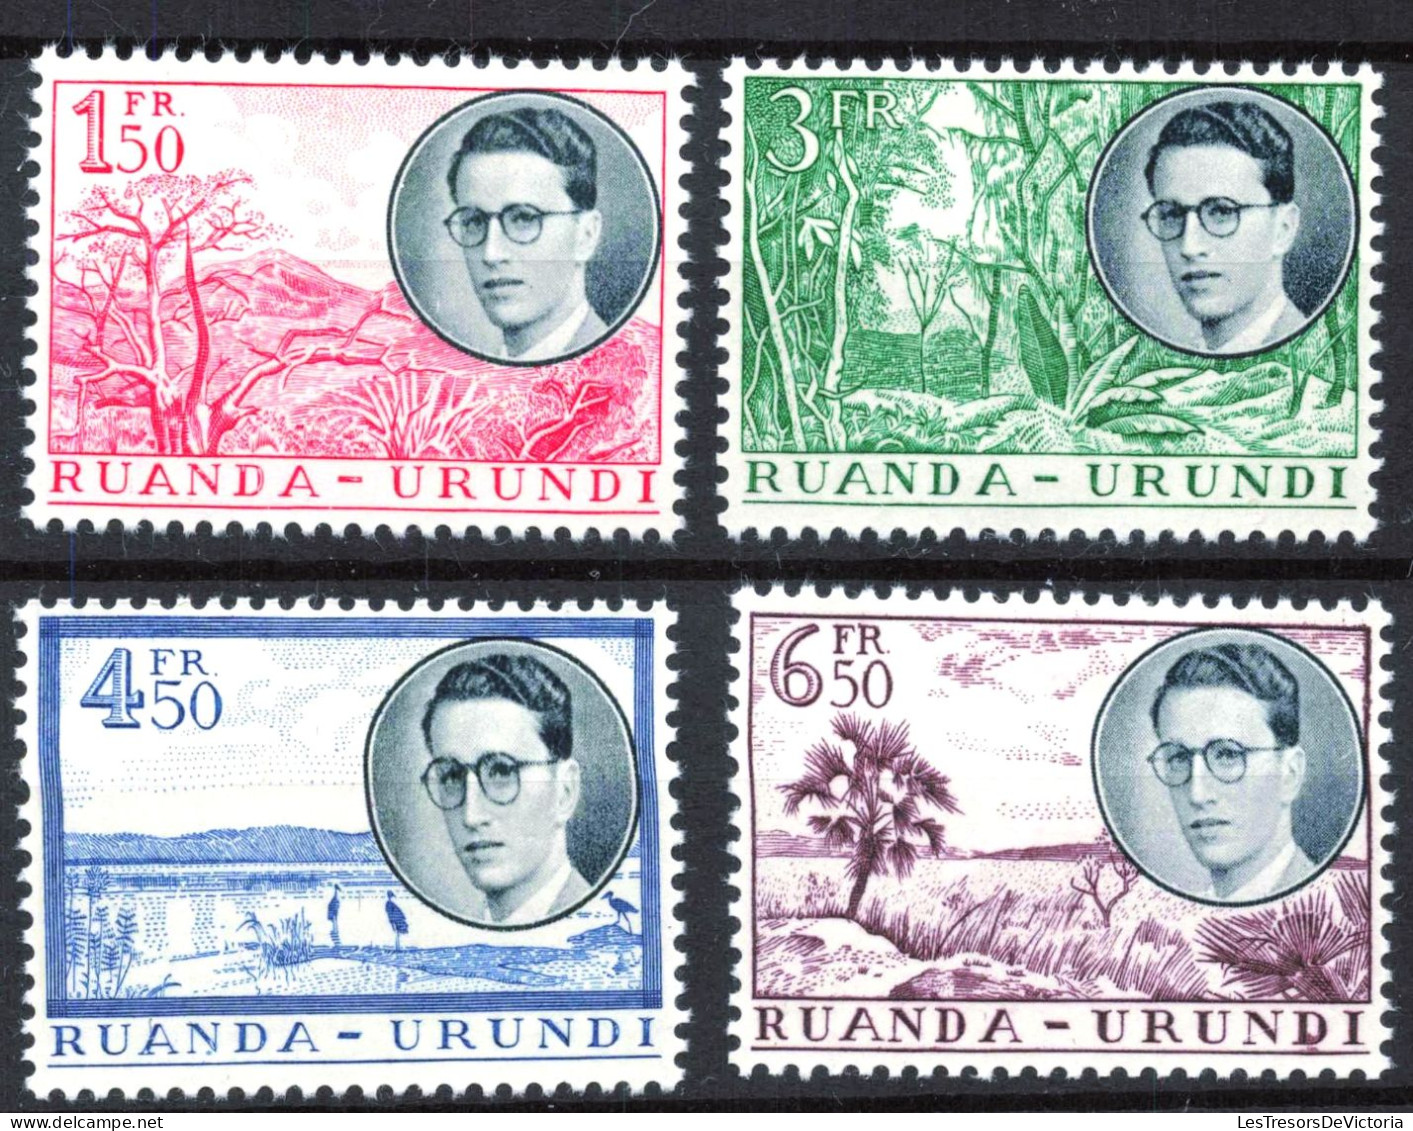 Timbre - Ruanda Urundi - COB 50/61* - 1924 - Timbre Congo Belge Surchargés Ruanda Urundi - Cote 45 - Unused Stamps